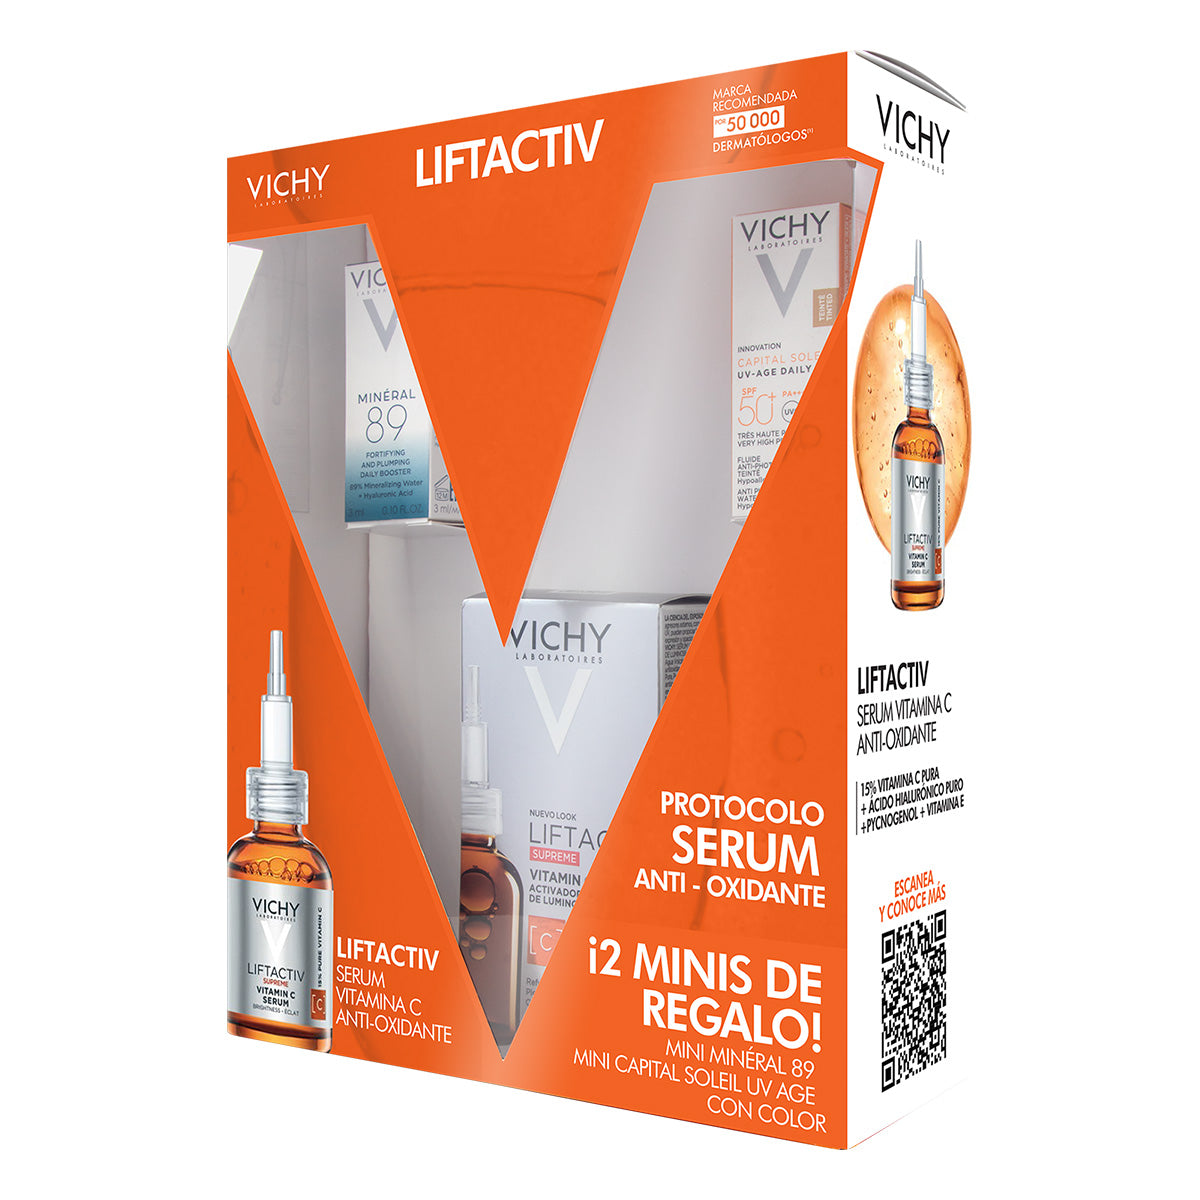 Vichy liftactiv serum vitamina c 20ml + mineral 89 3ml + ech uv age tint light ip50+ 3ml.